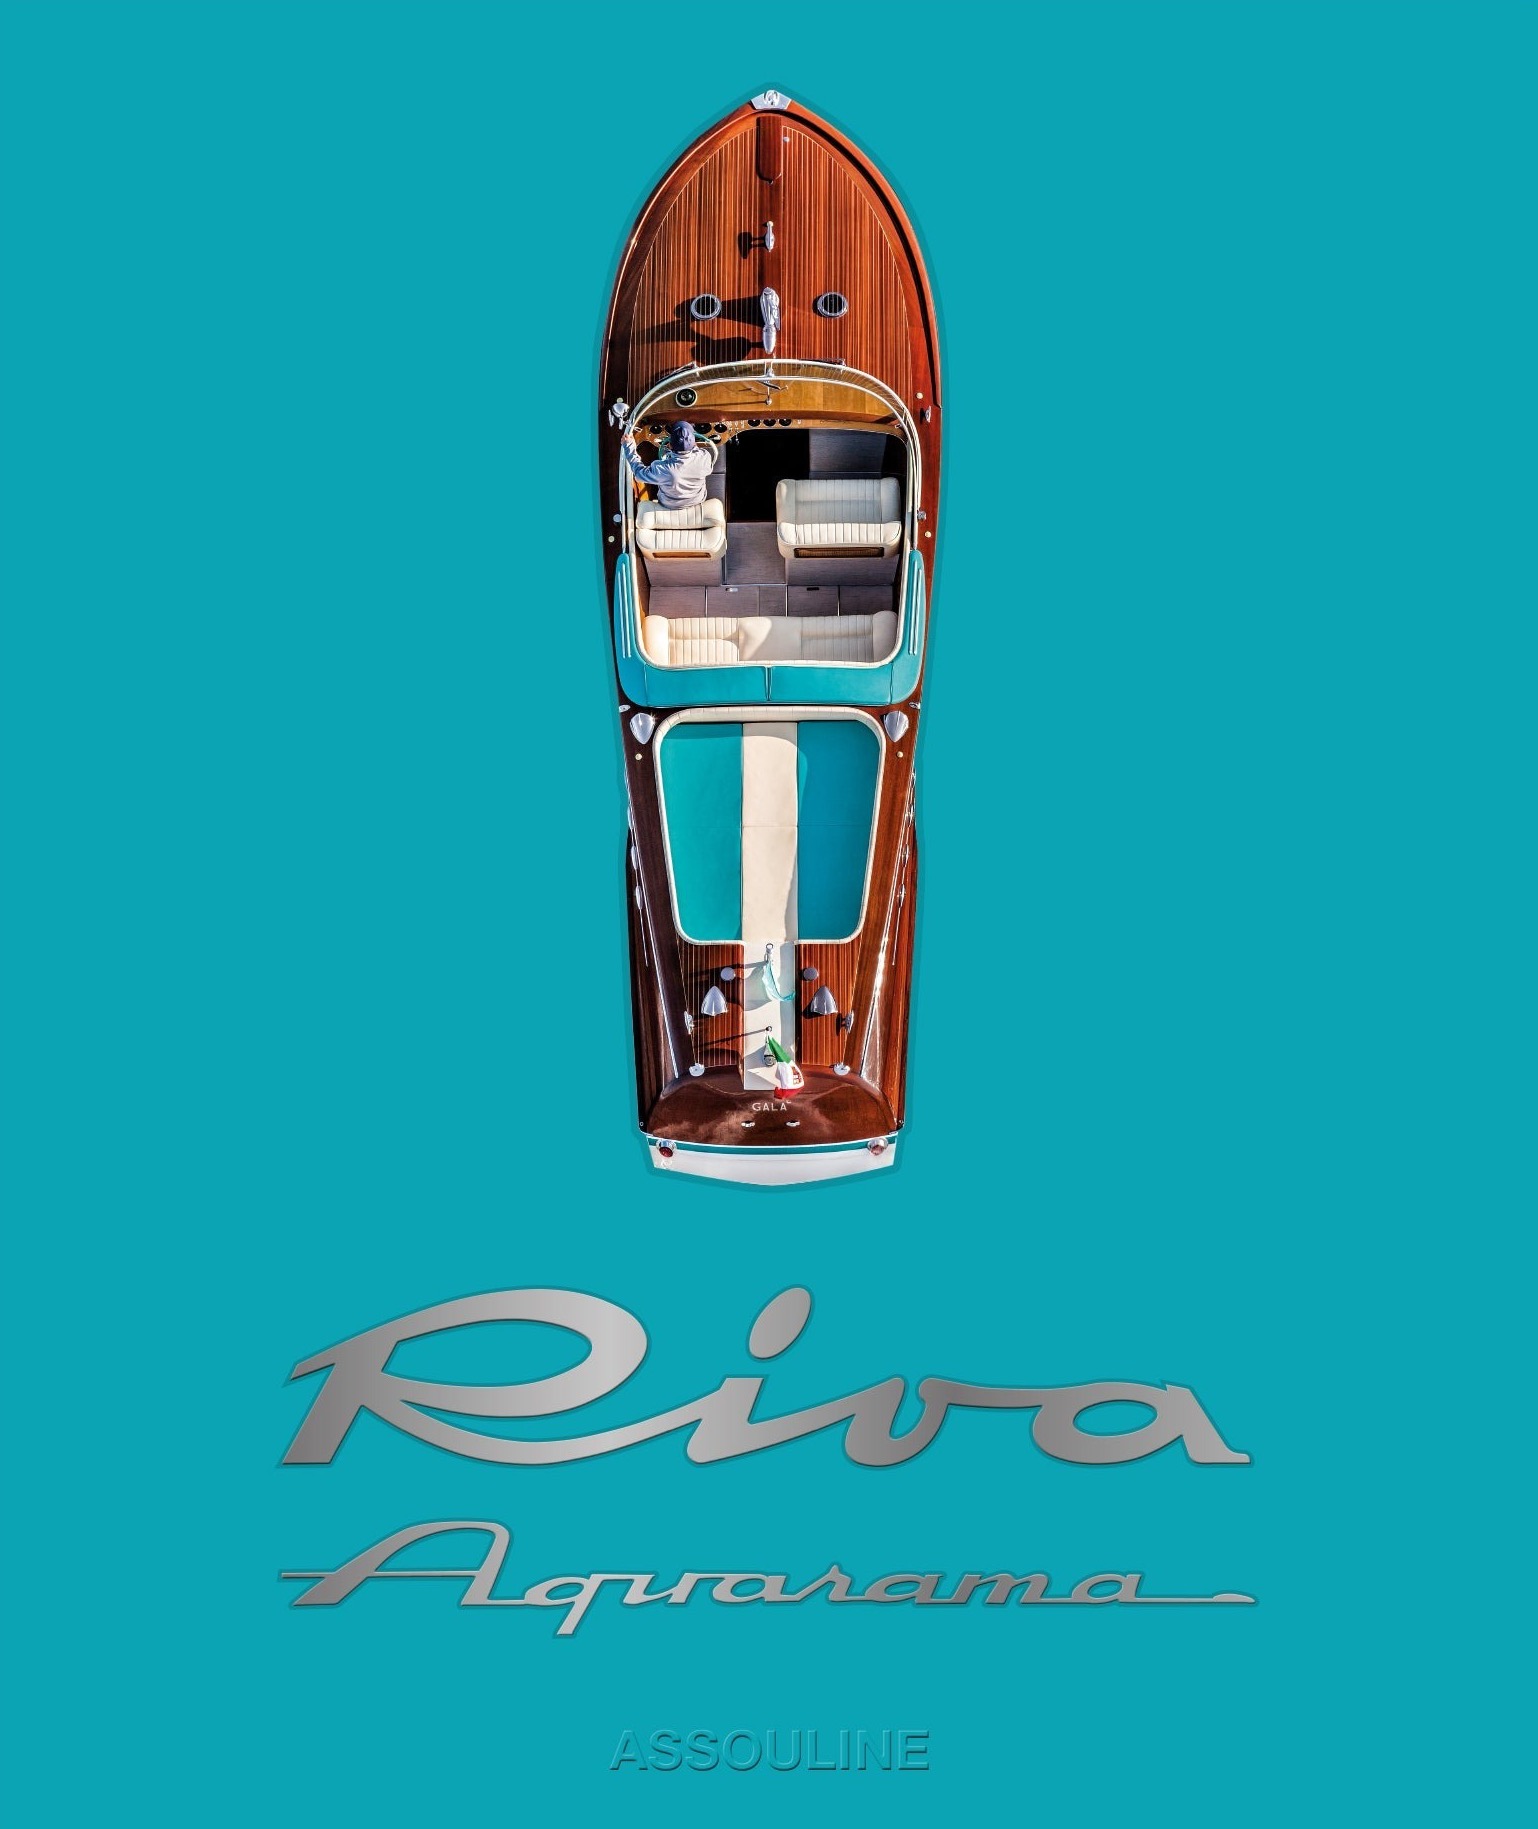 Assouline: Riva Aquarama